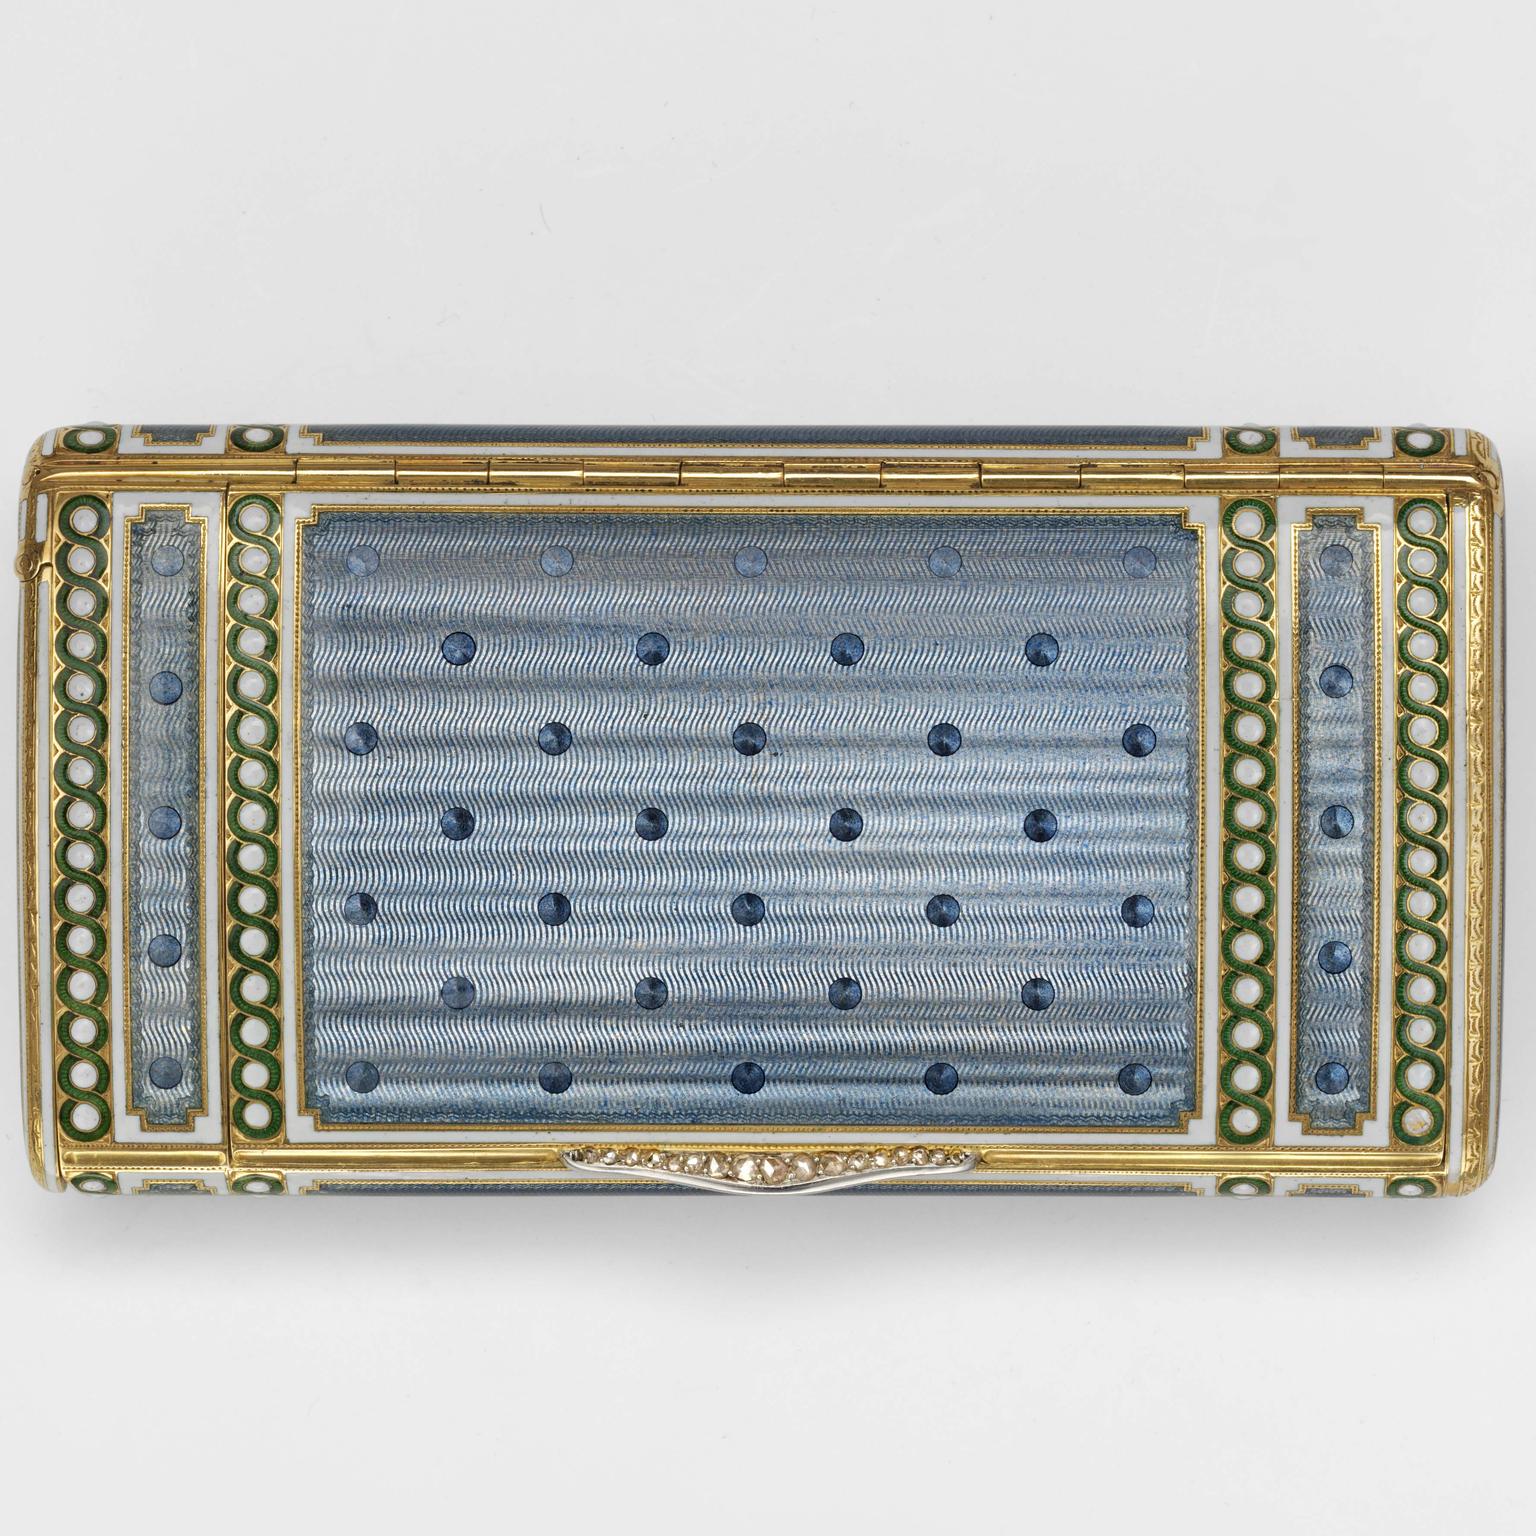 1907 Cartier cigarette case